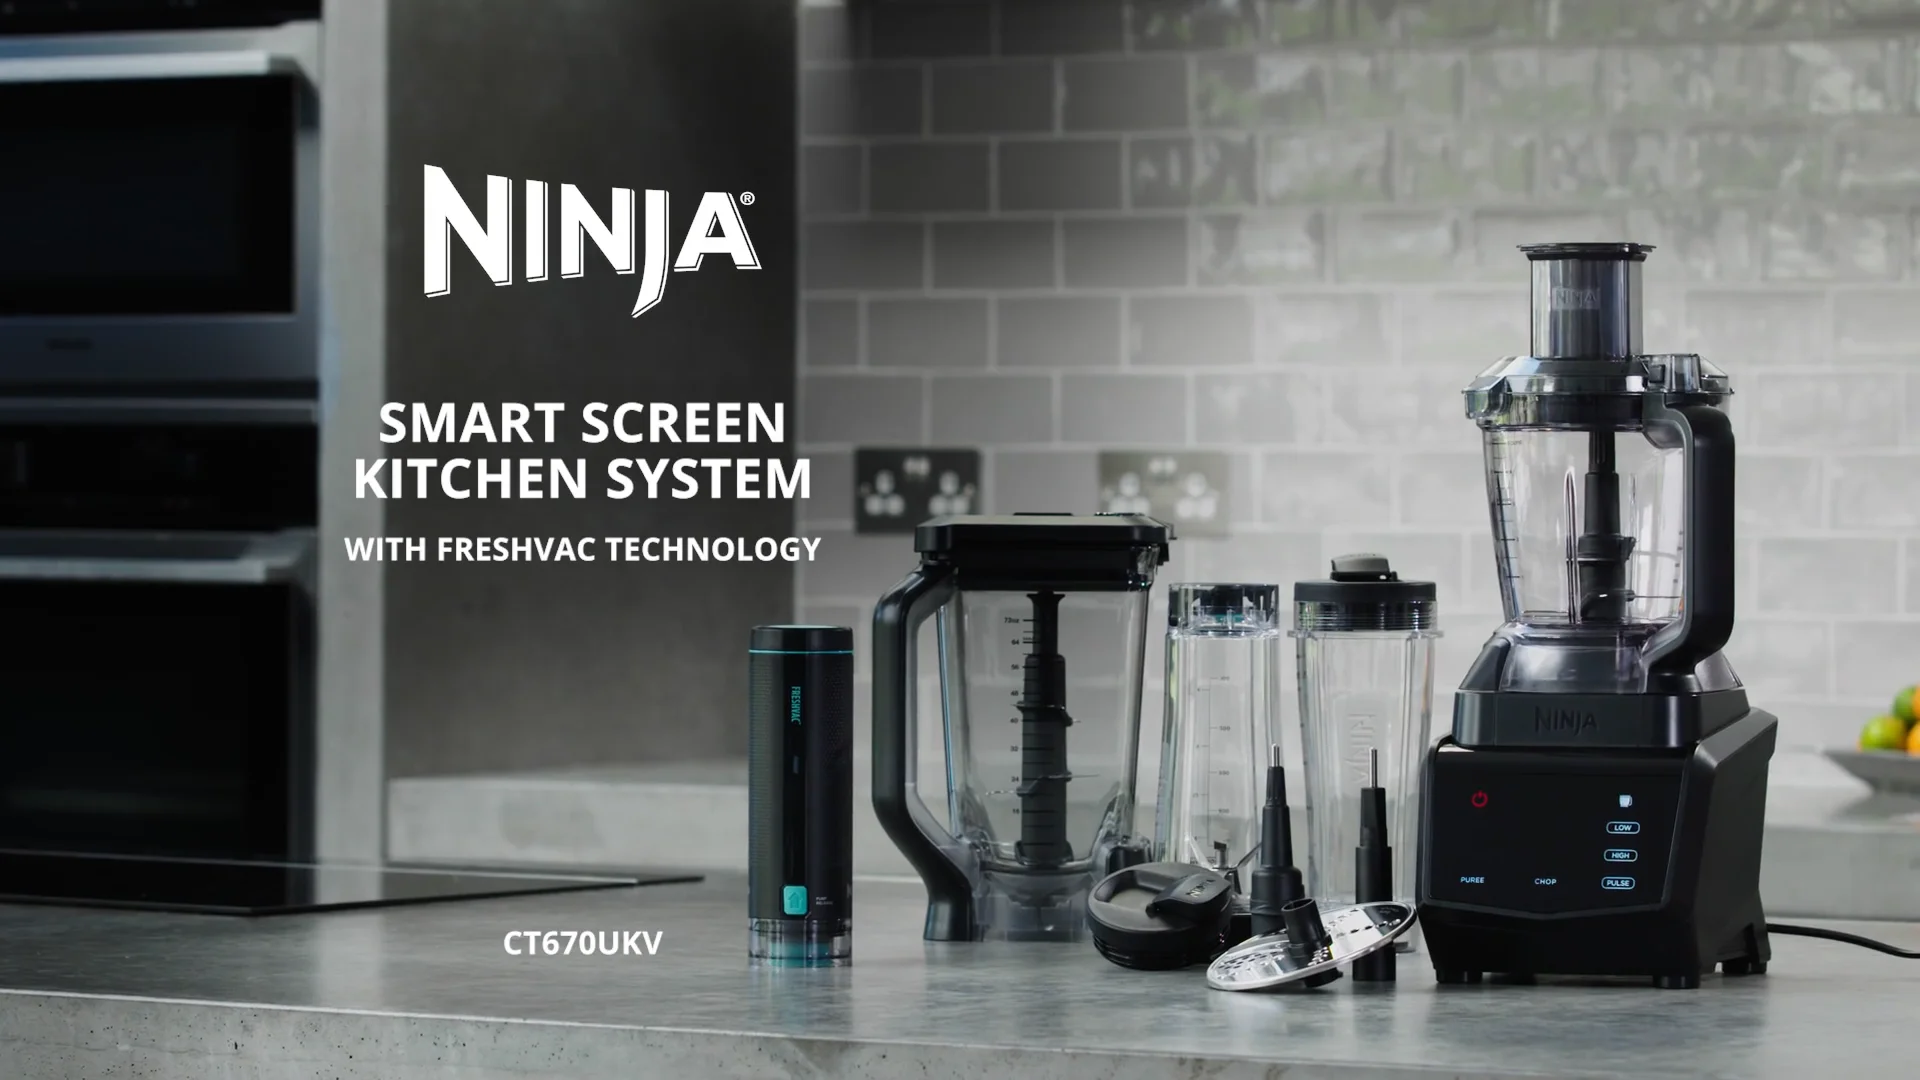 Ninja Foodi Power Blender System on Vimeo